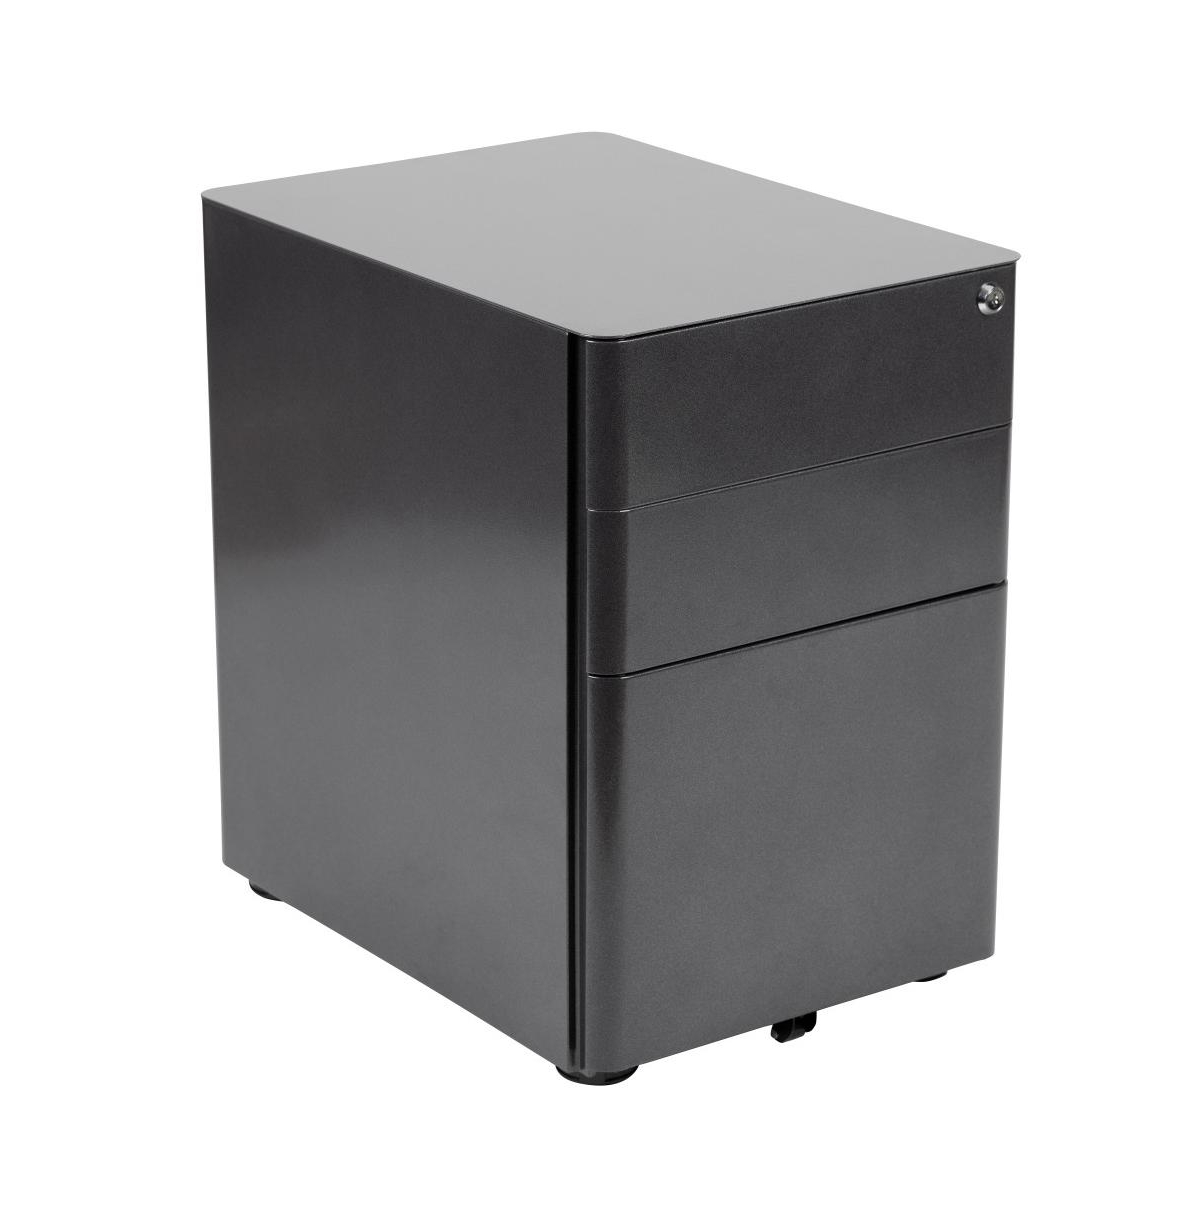 Emma+oliver Modern 3-drawer Mobile Locking Filing Cabinet Storage Organizer In Black